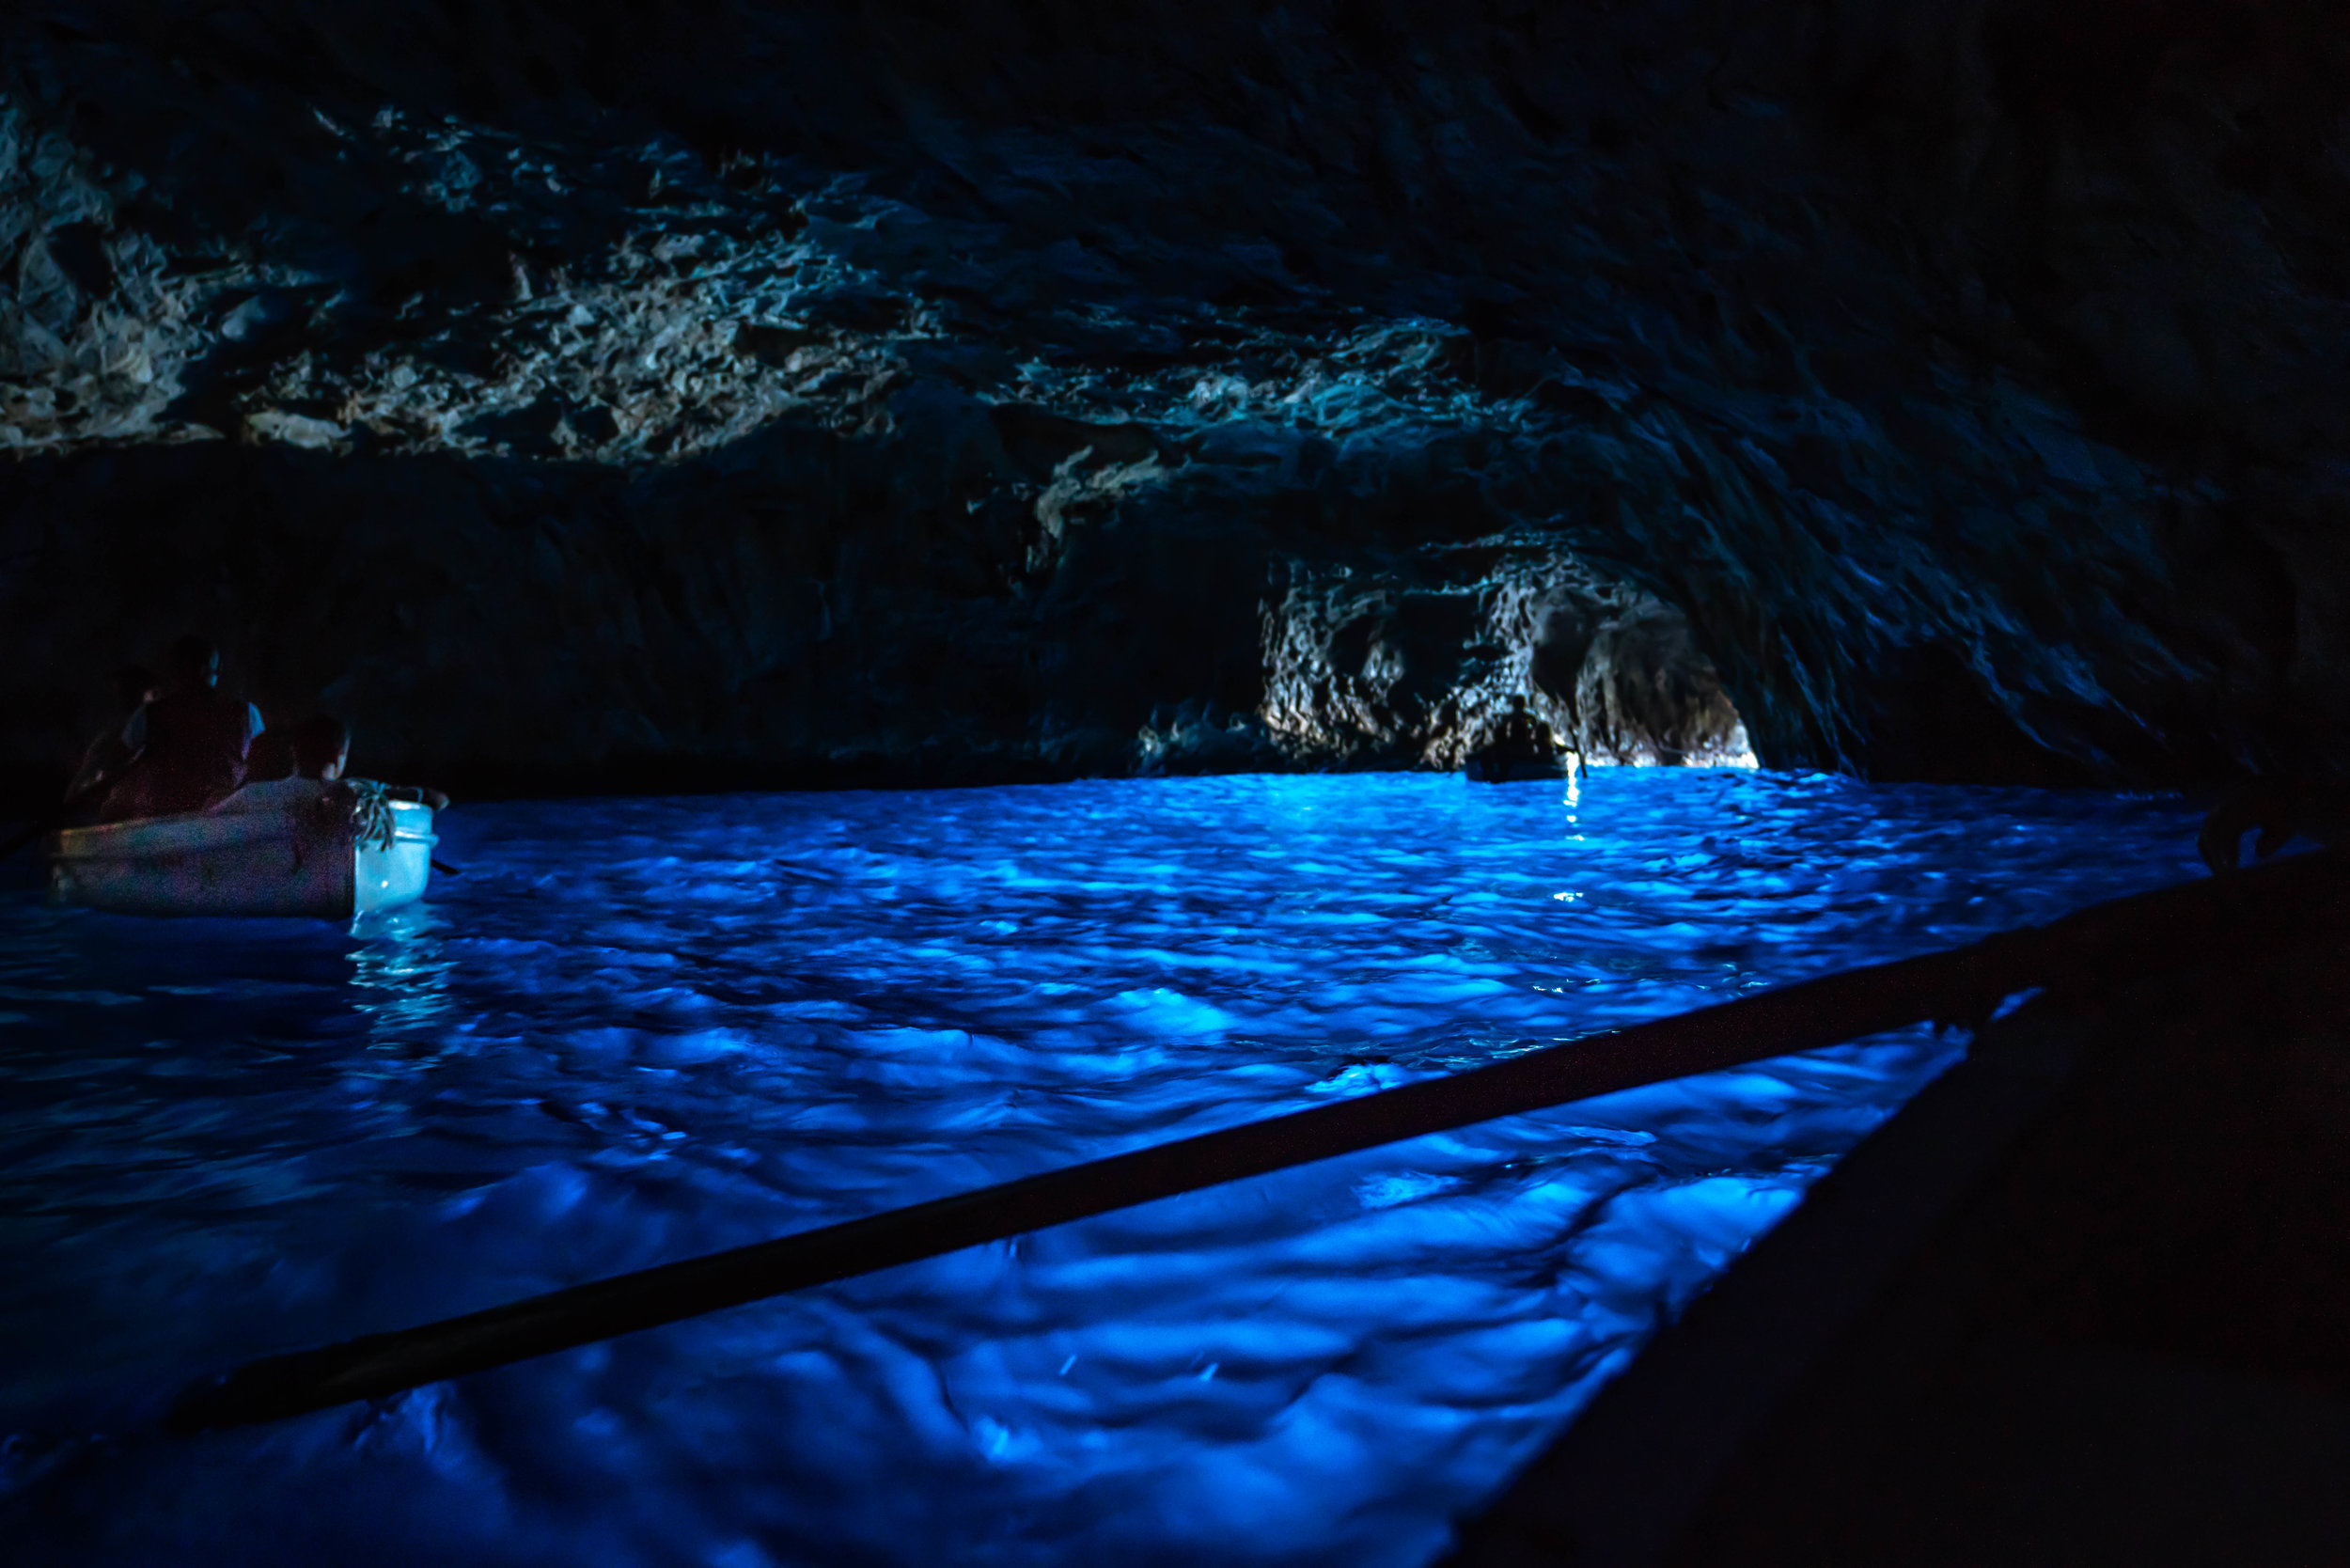  Blue Grotto  